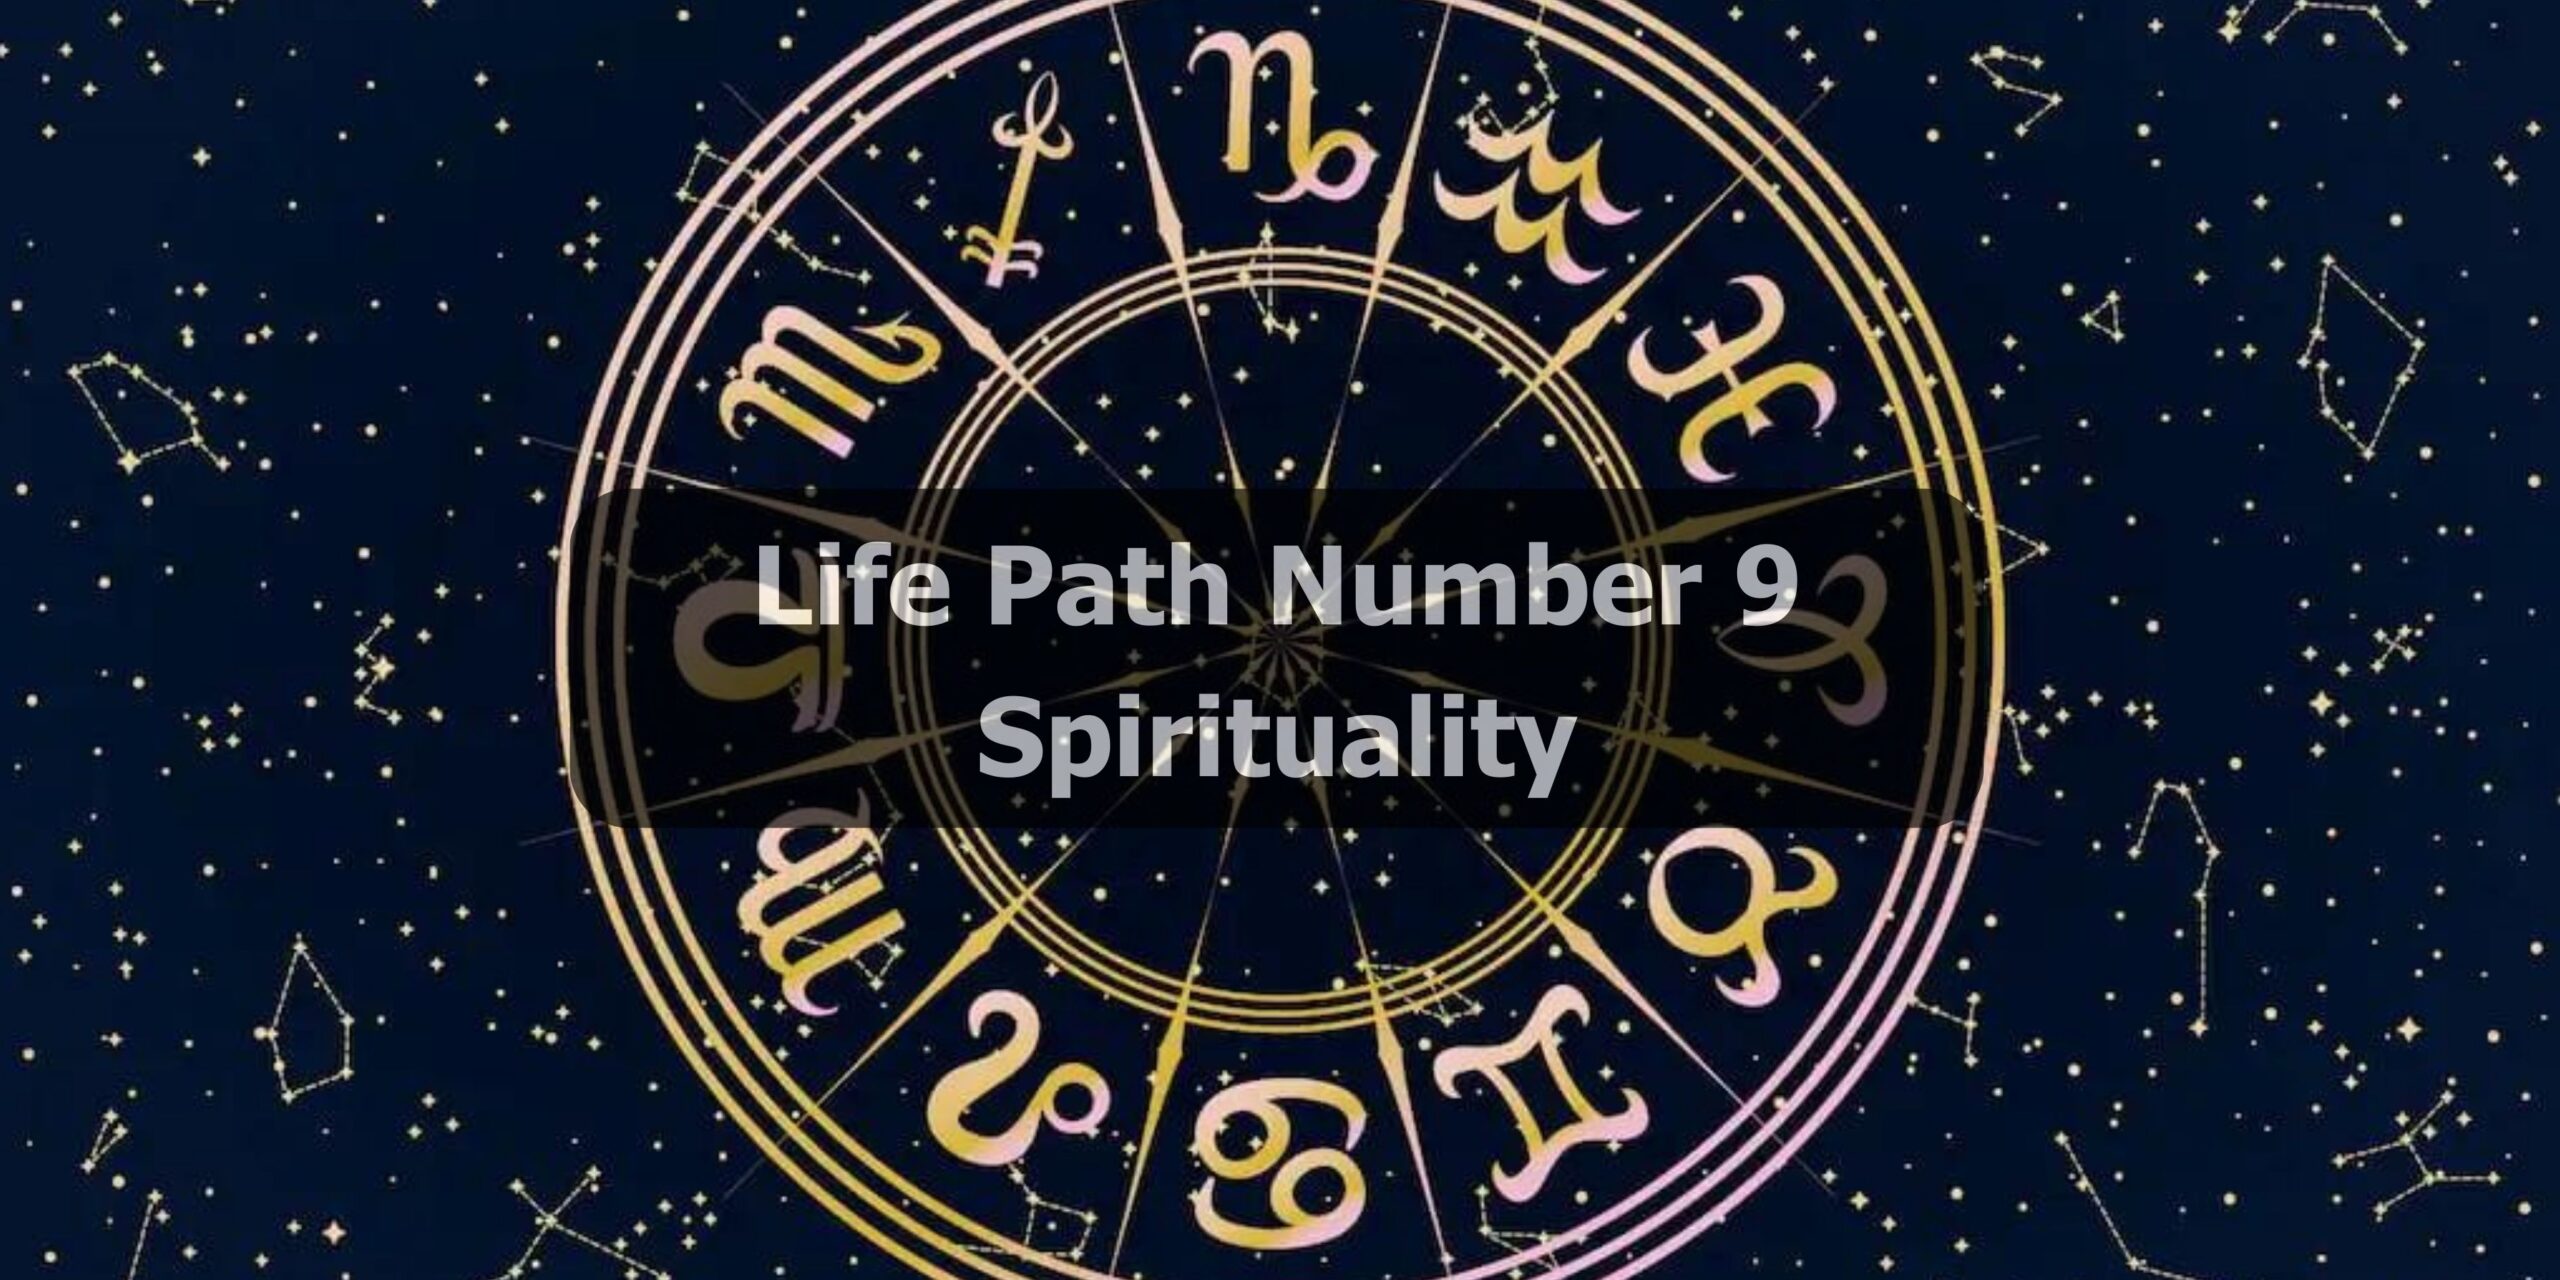 Life Path Number 9 Spirituality